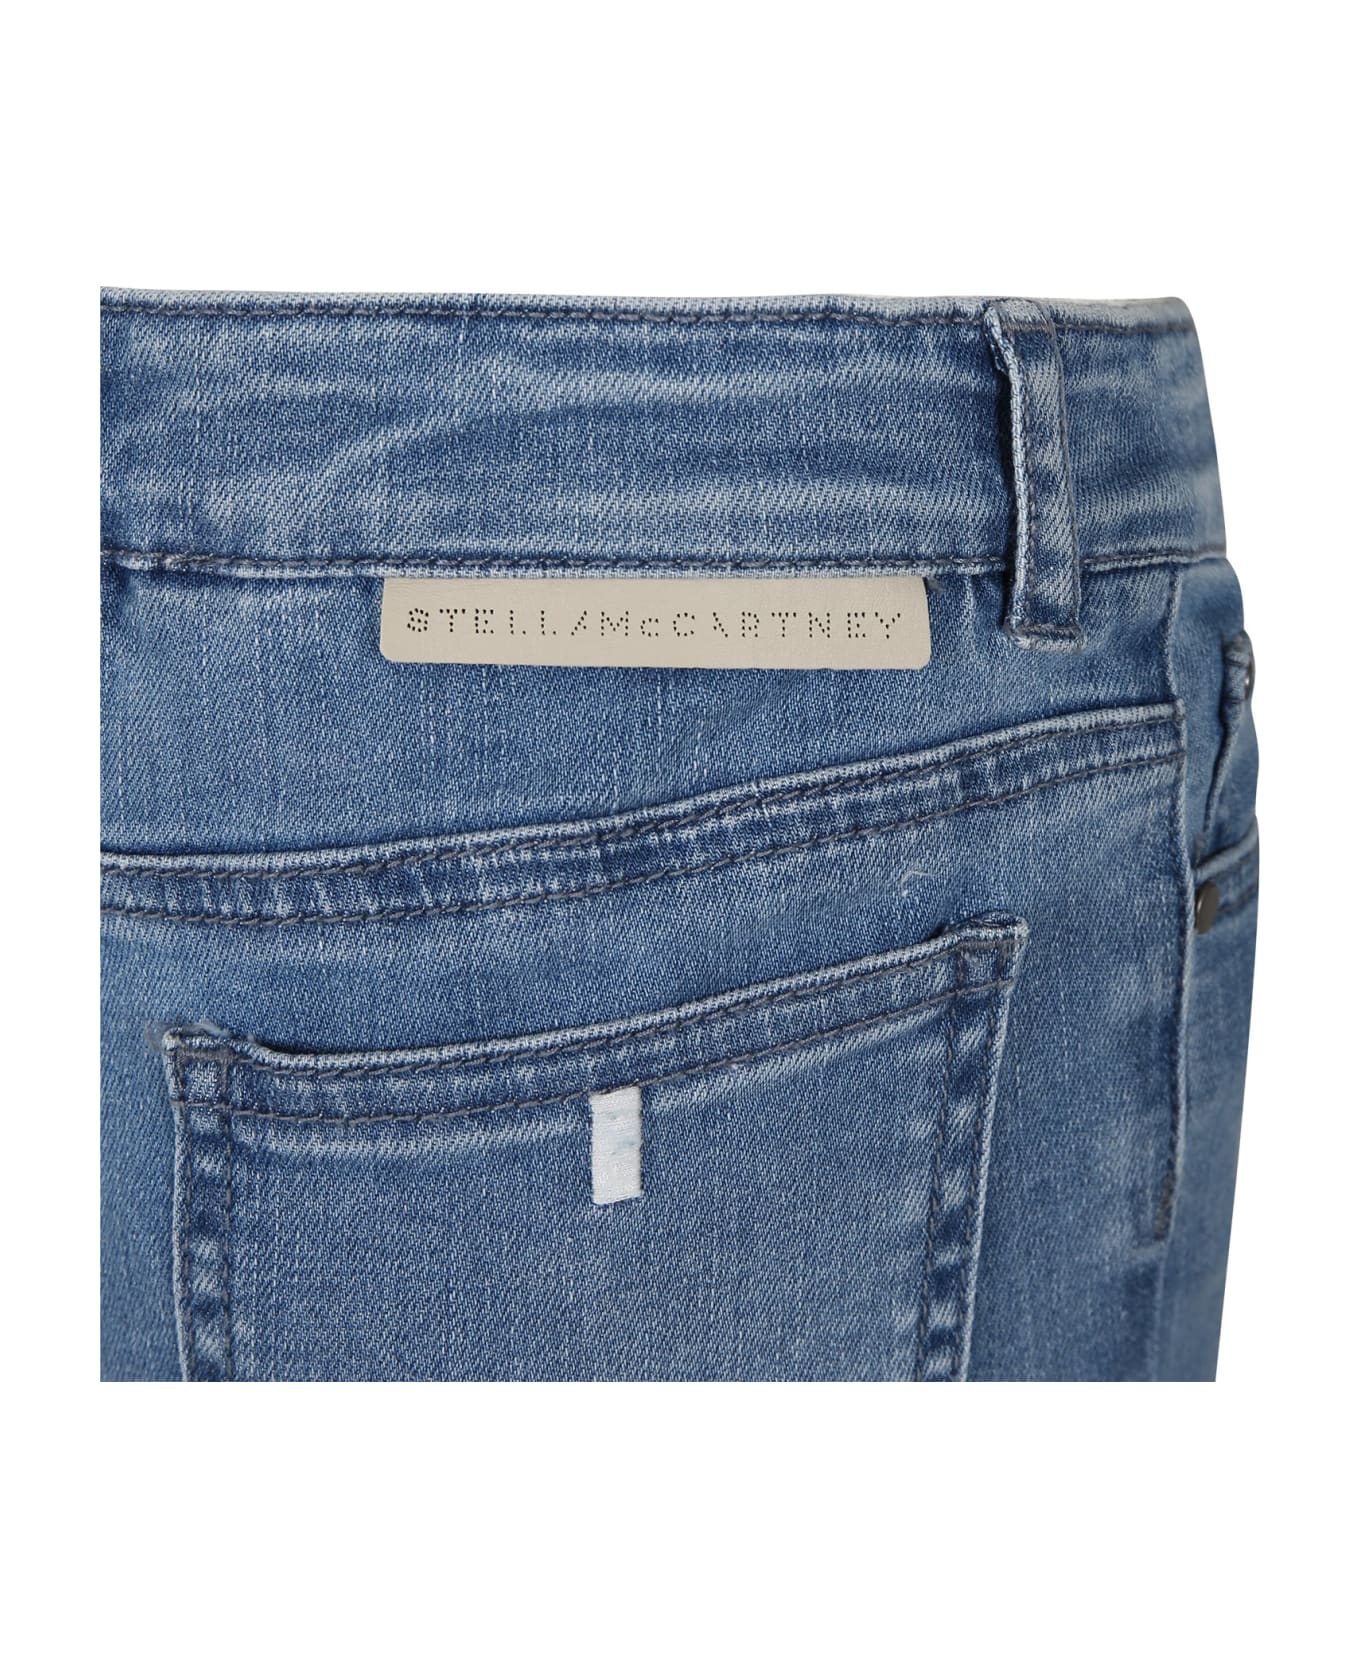 Stella McCartney Kids Denim Flare Jeans For Girl With Fringes - Denim